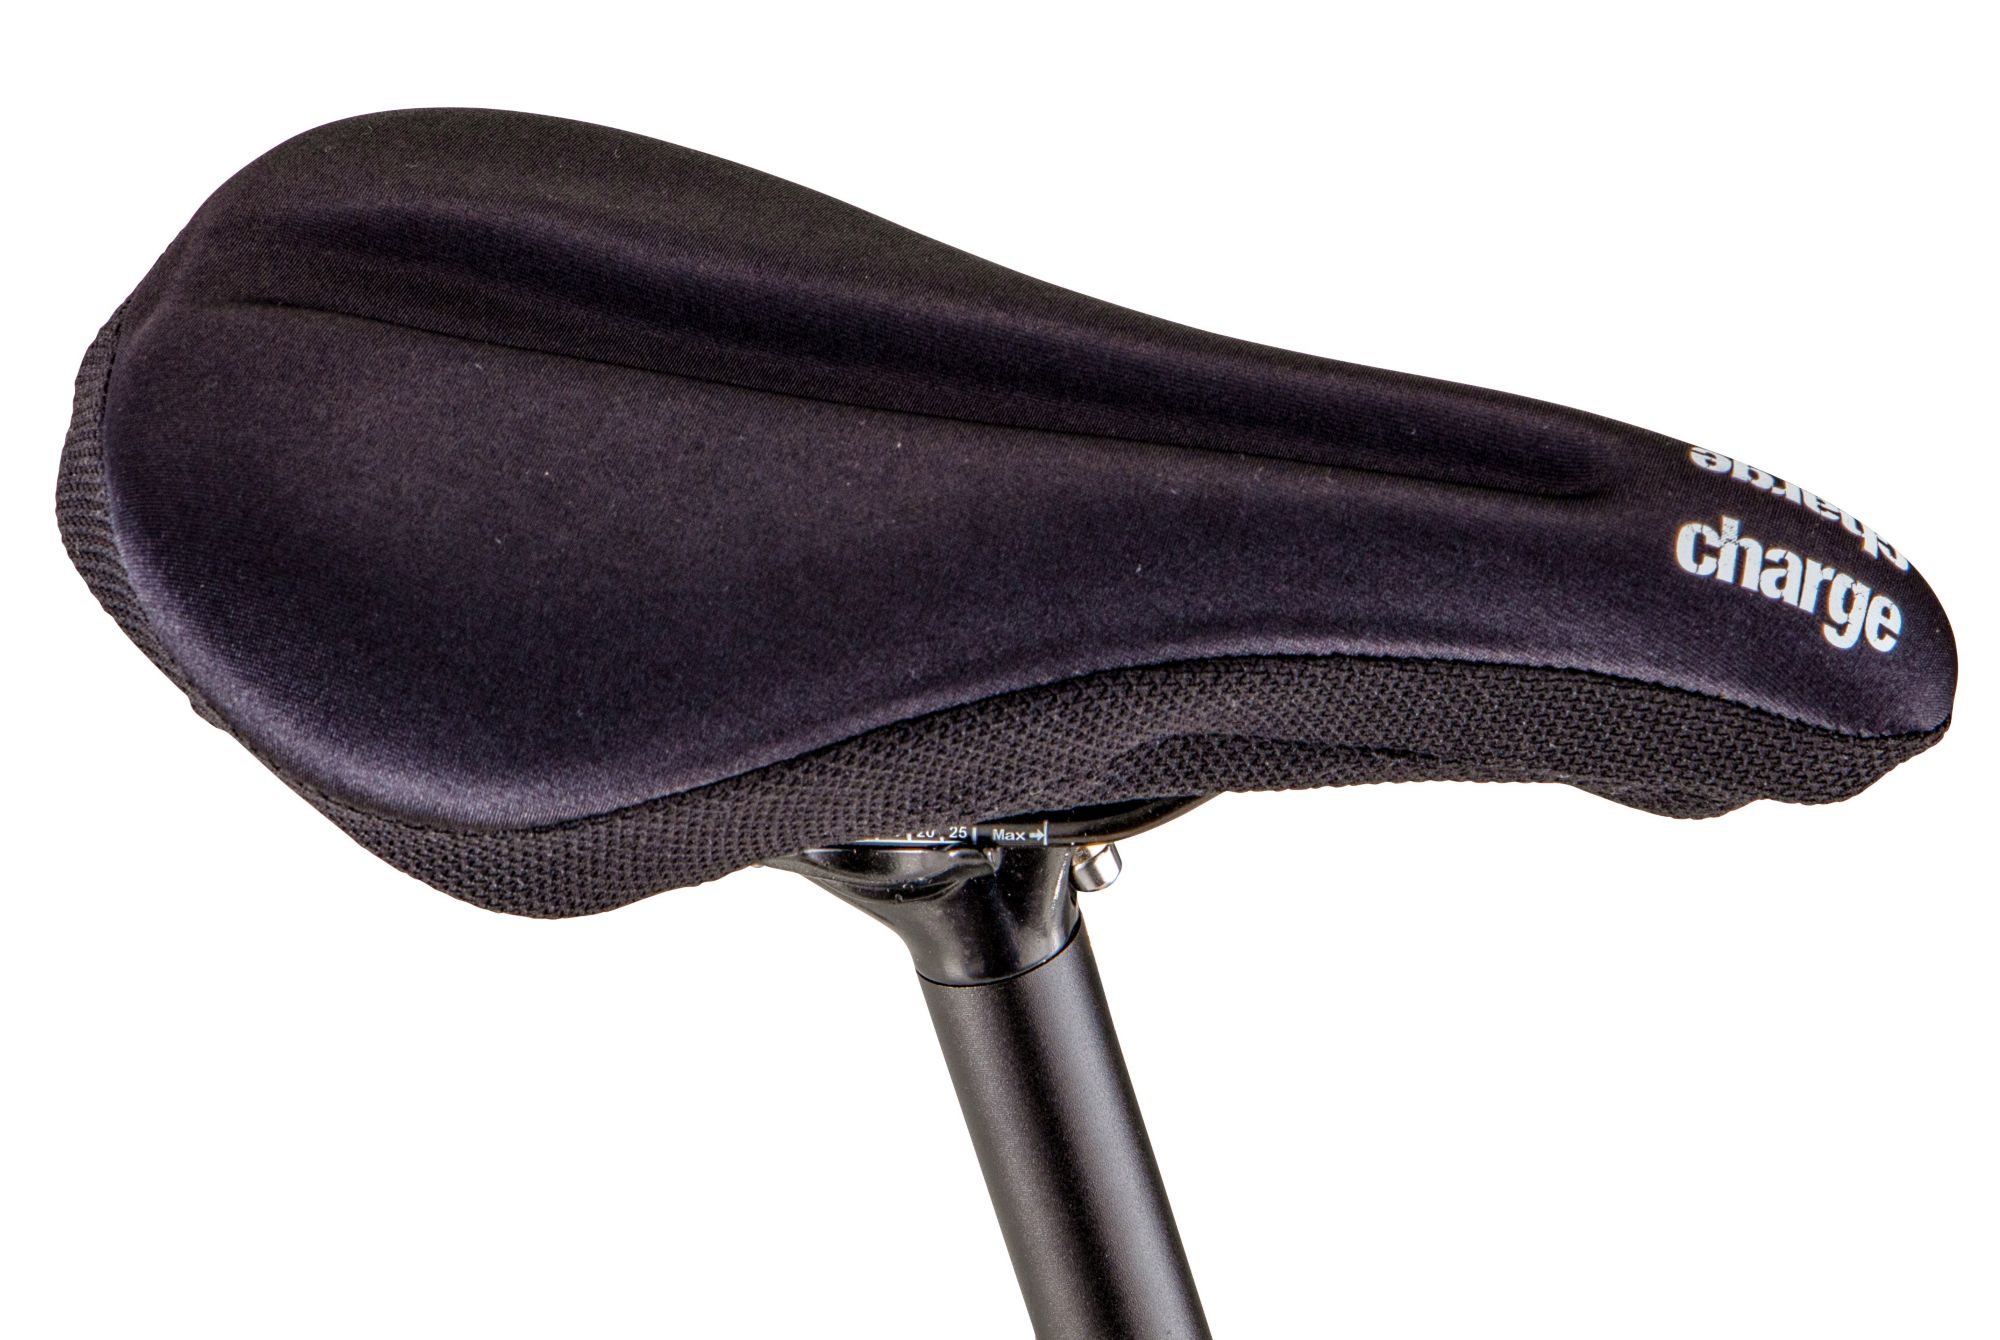 tesco bike seat cover